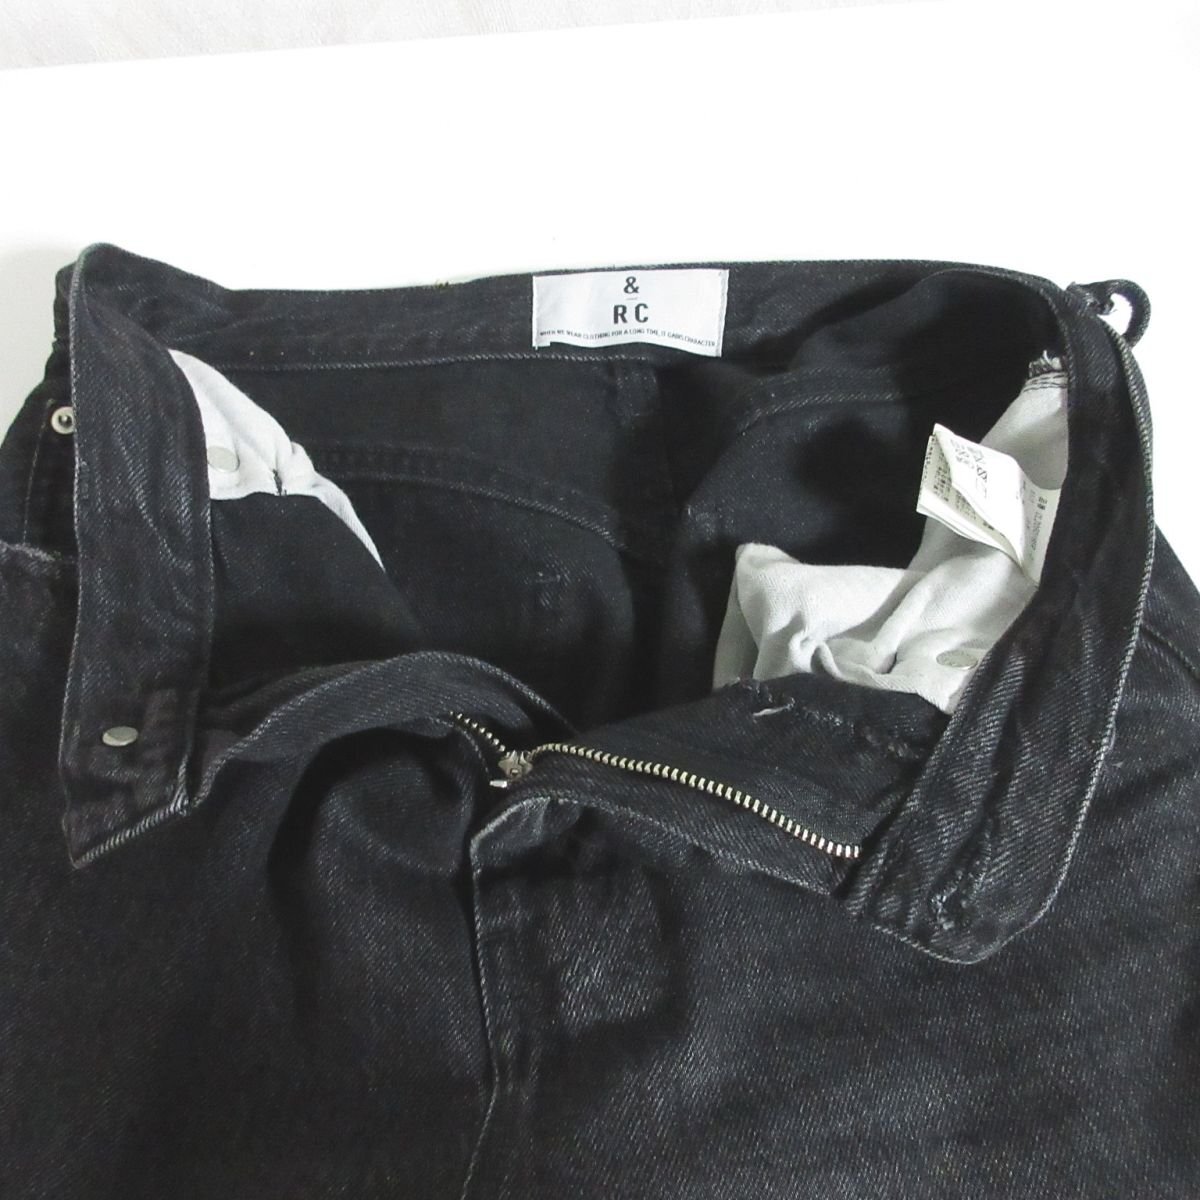  beautiful goods Curensology Curren Solo ji-&RC car vi - Denim jeans wide pants CL205016ER 38 black *